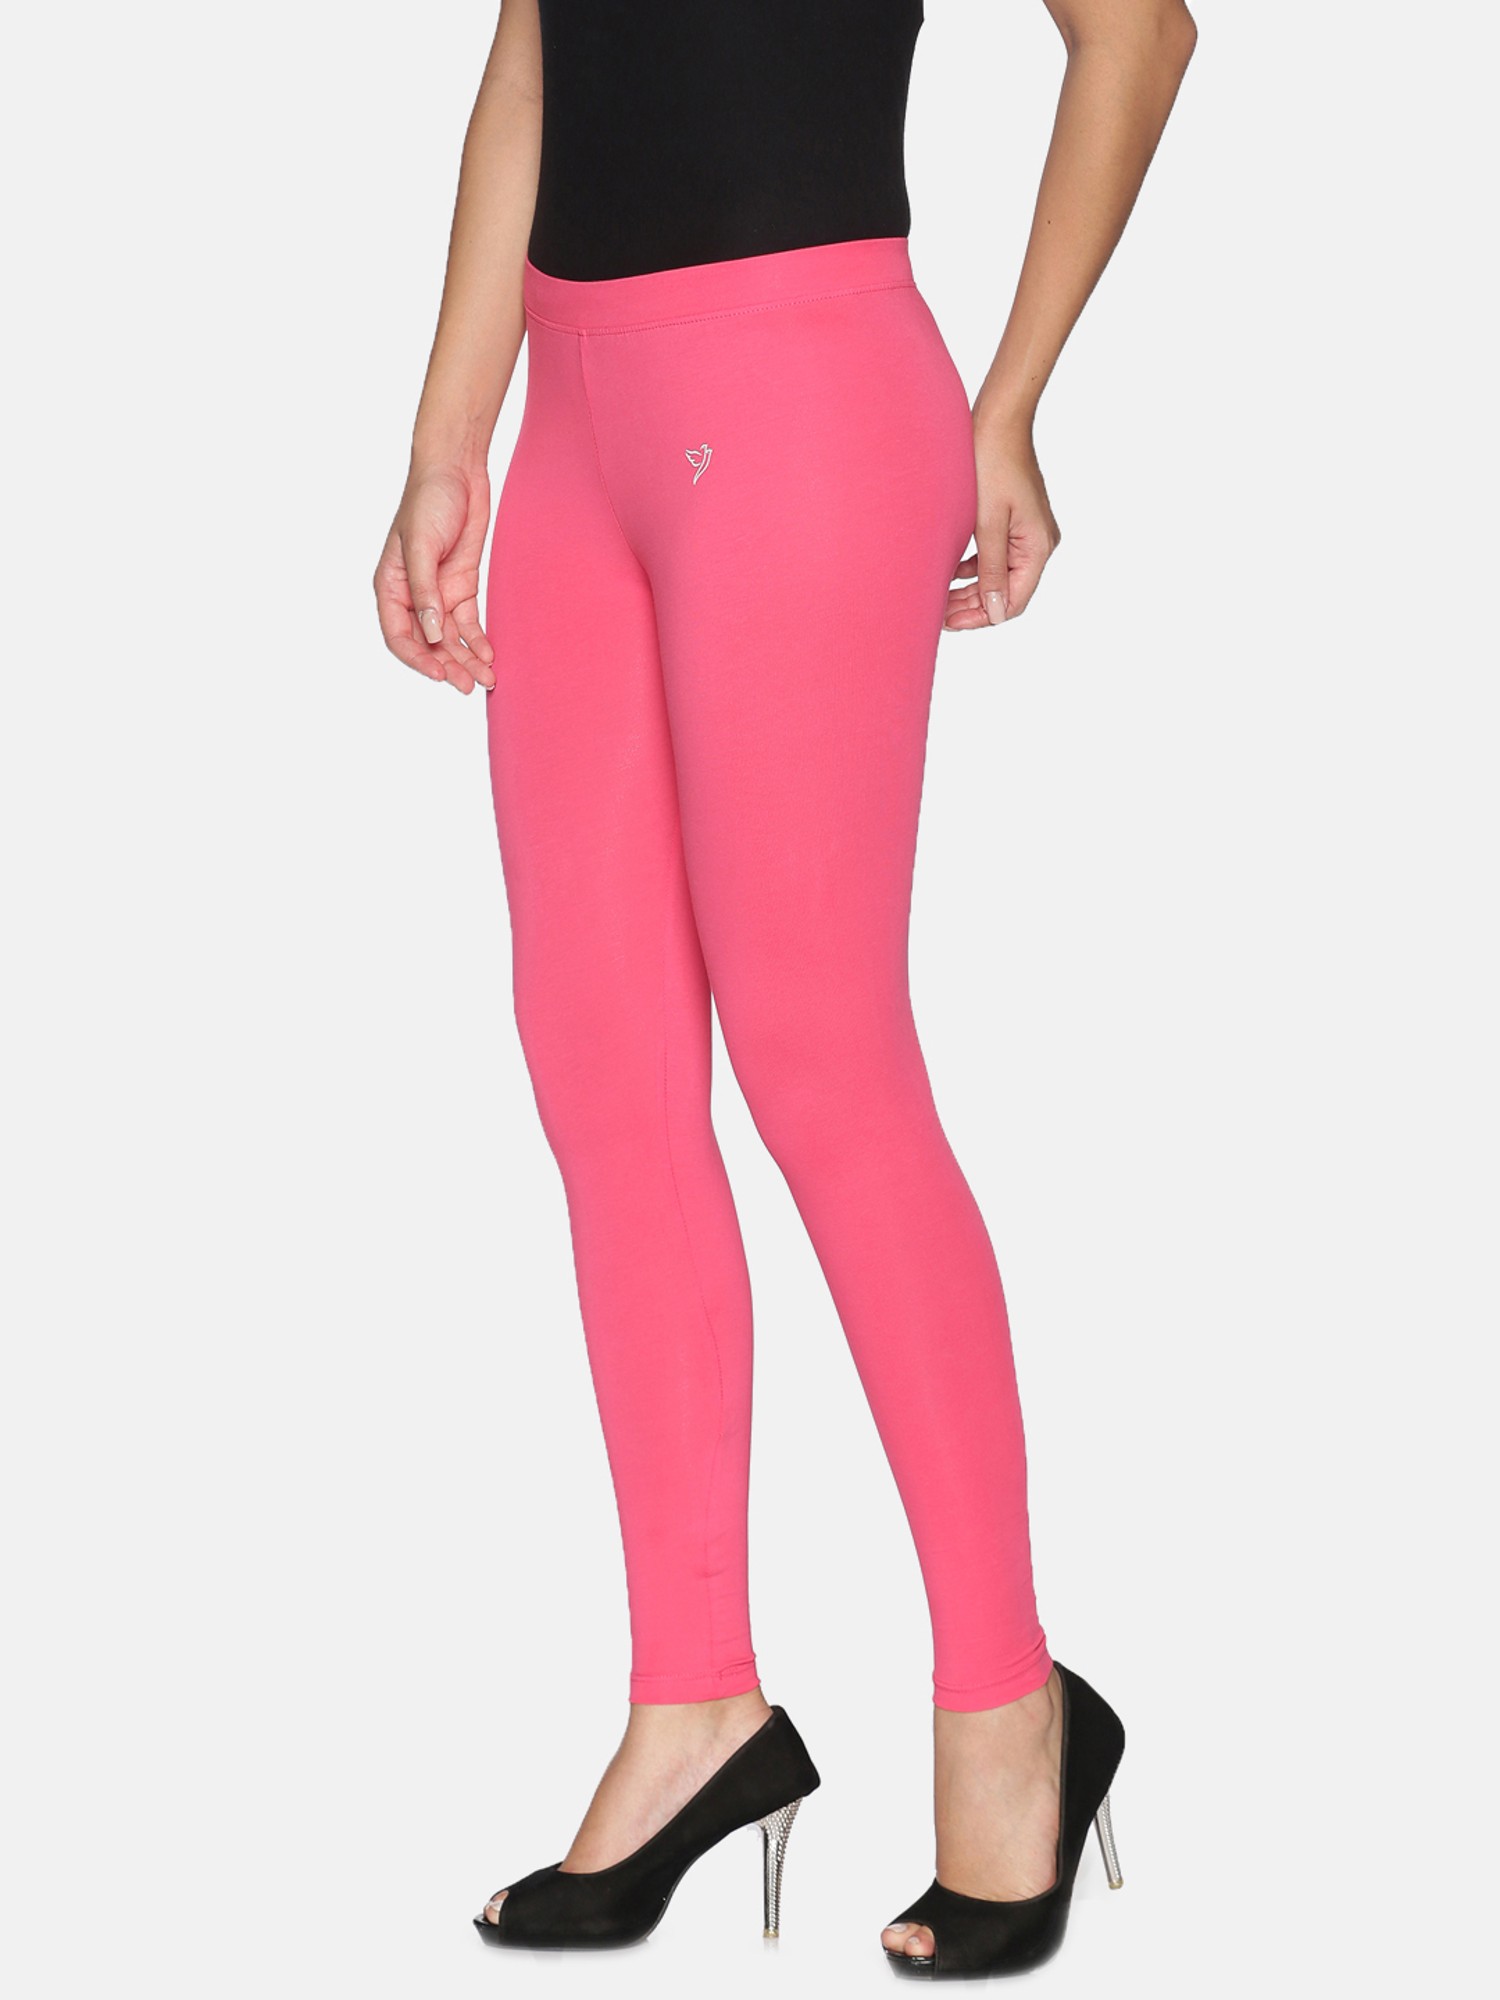 Women's High Shine Long Legging - Neon Pink | PixieLane